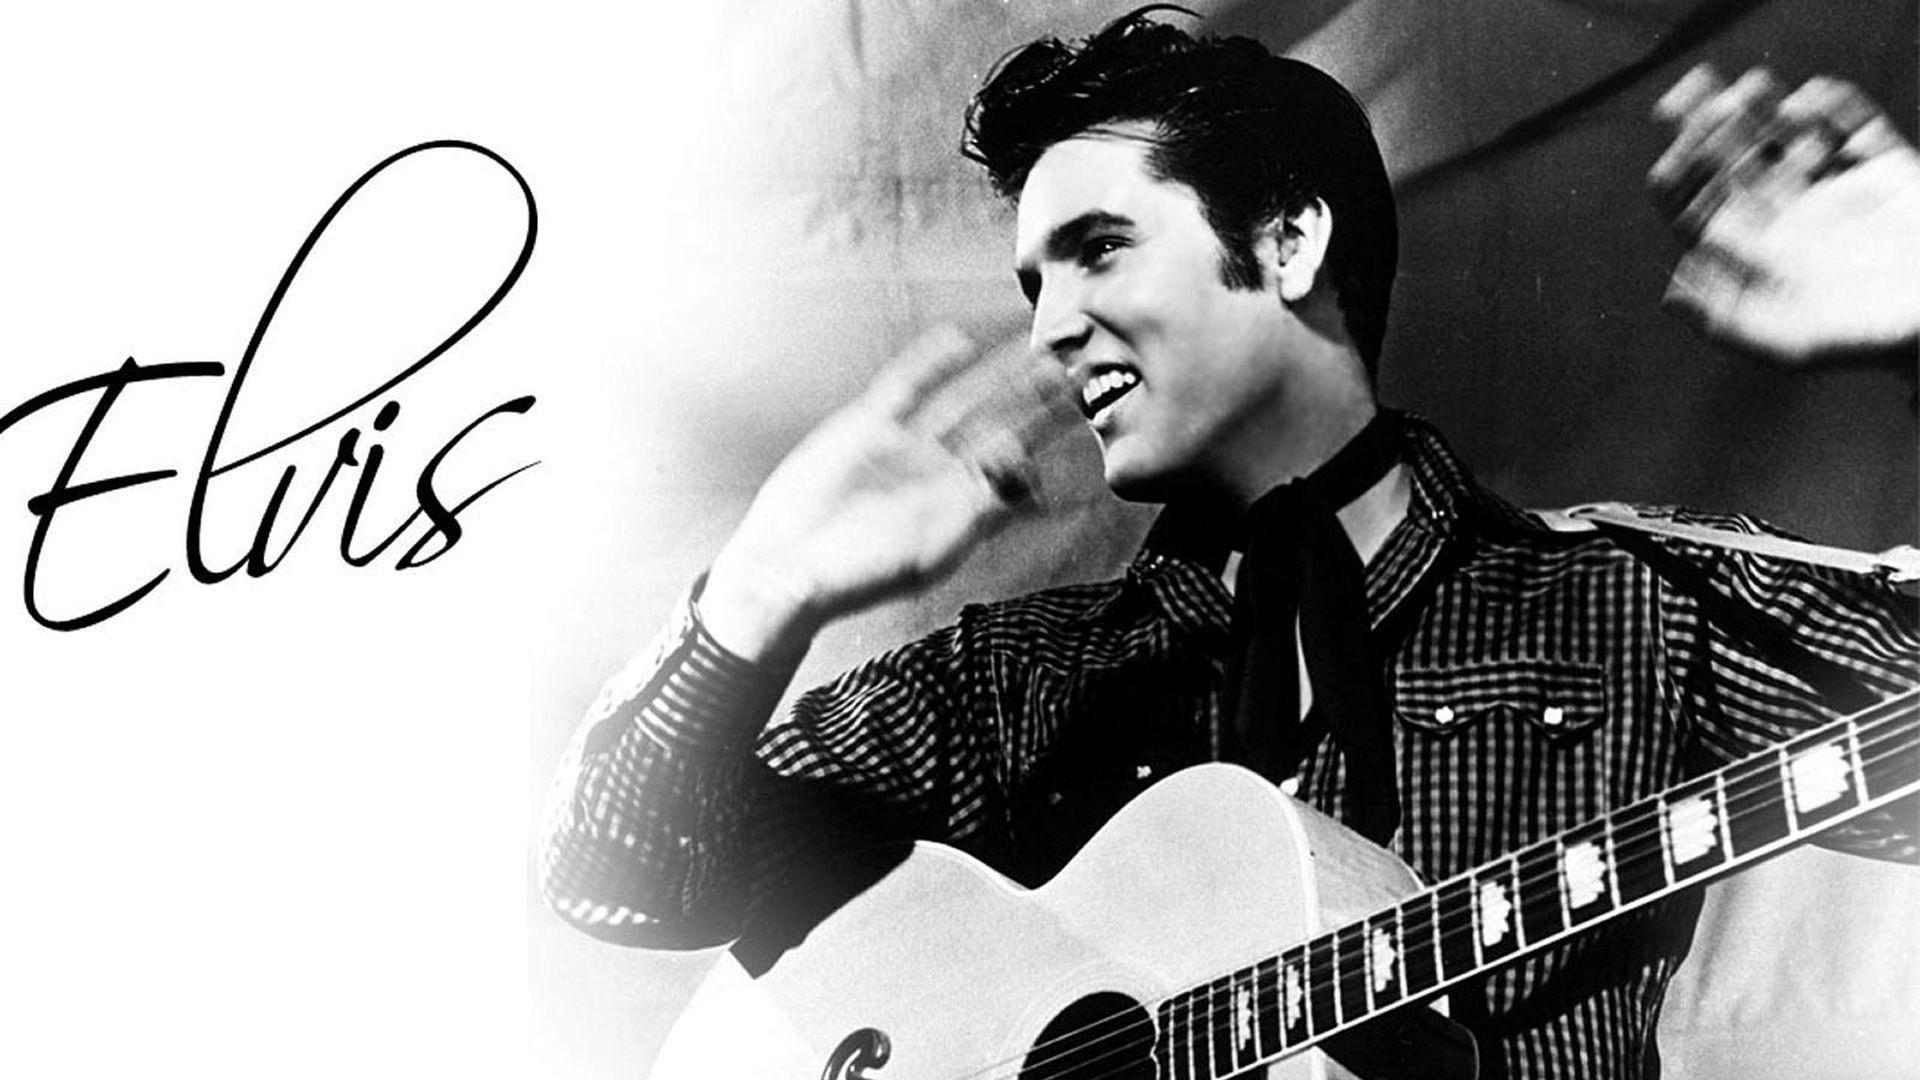 Fonds d&;écran Elvis Presley, tous les wallpaper Elvis Presley